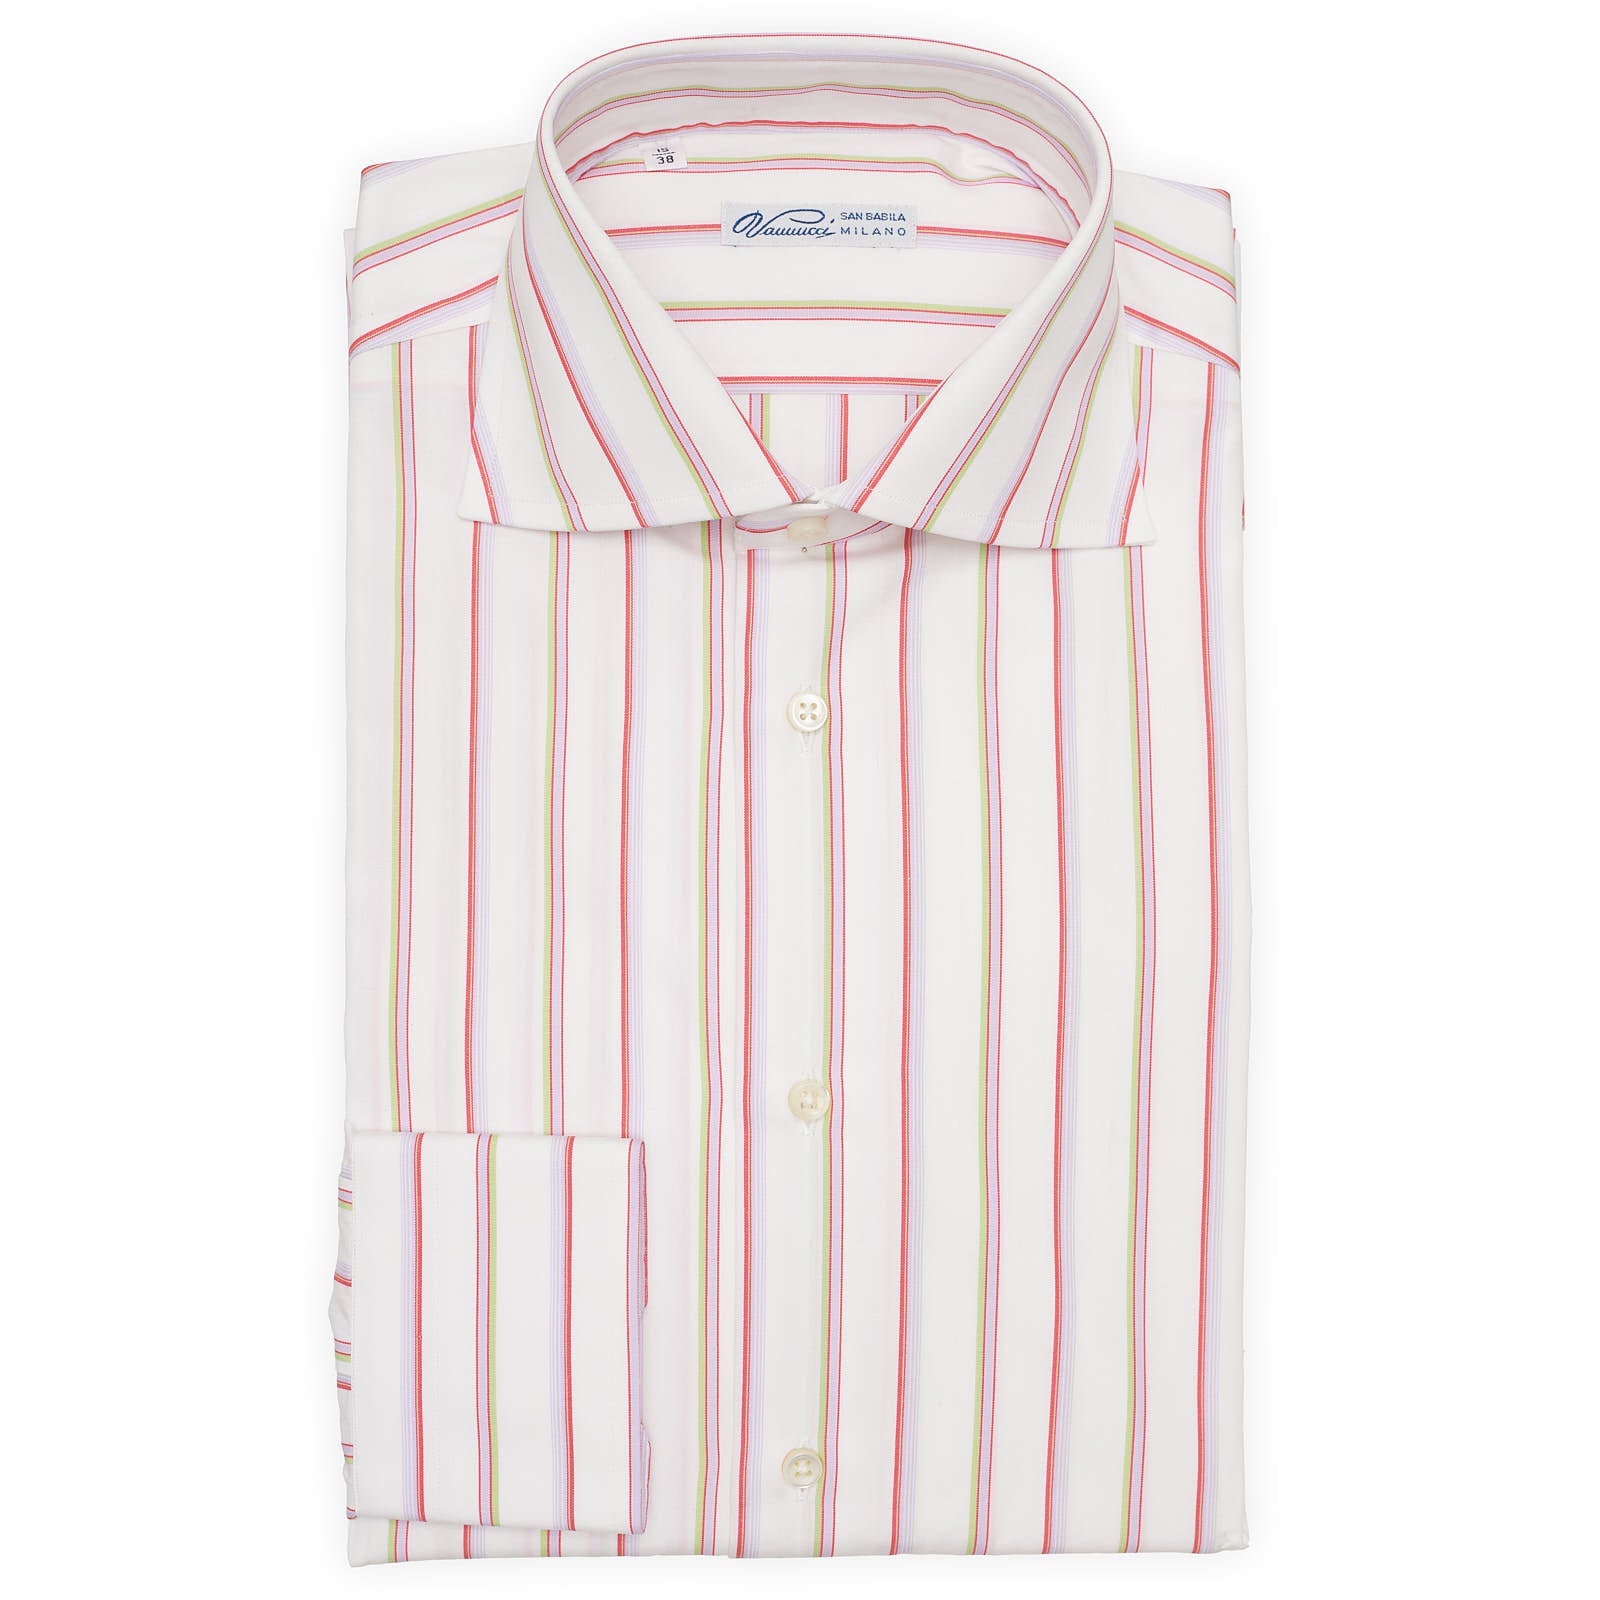 VANNUCCI Milano Striped Cotton Dress Shirt EU 38 NEW US 15